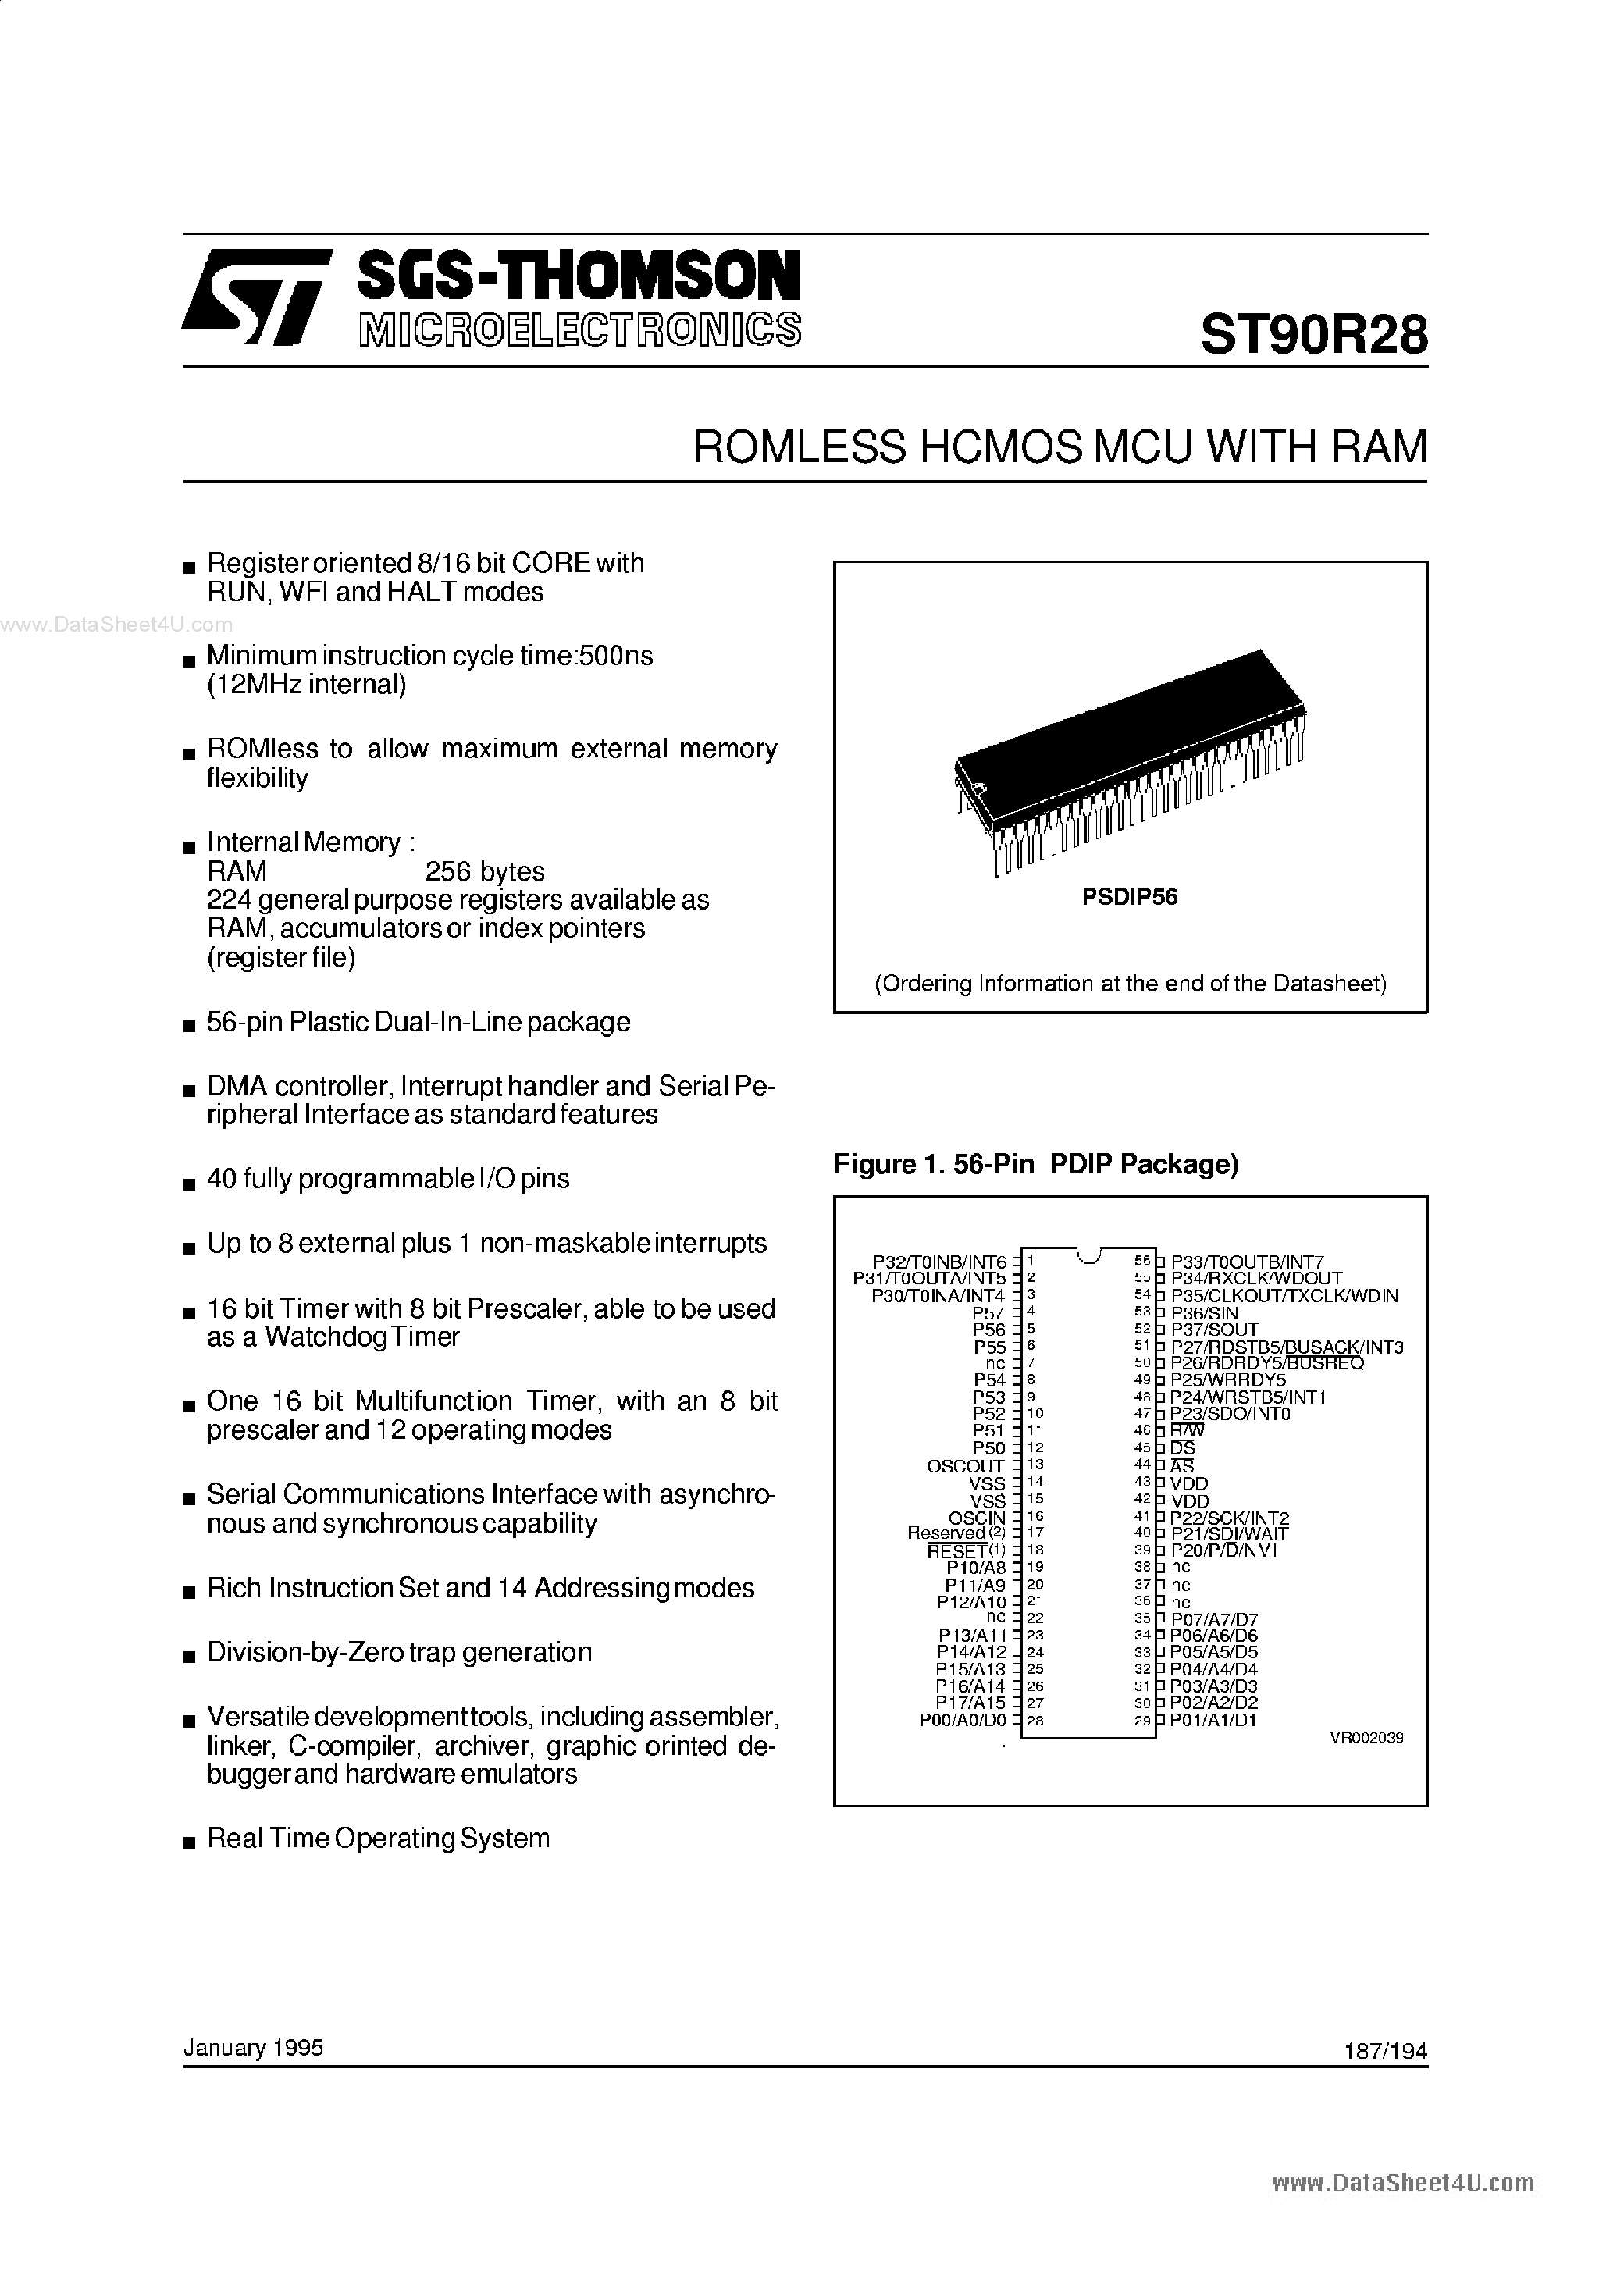 Datasheet ST90R28 - ROMLESS HCMOS MCU page 1